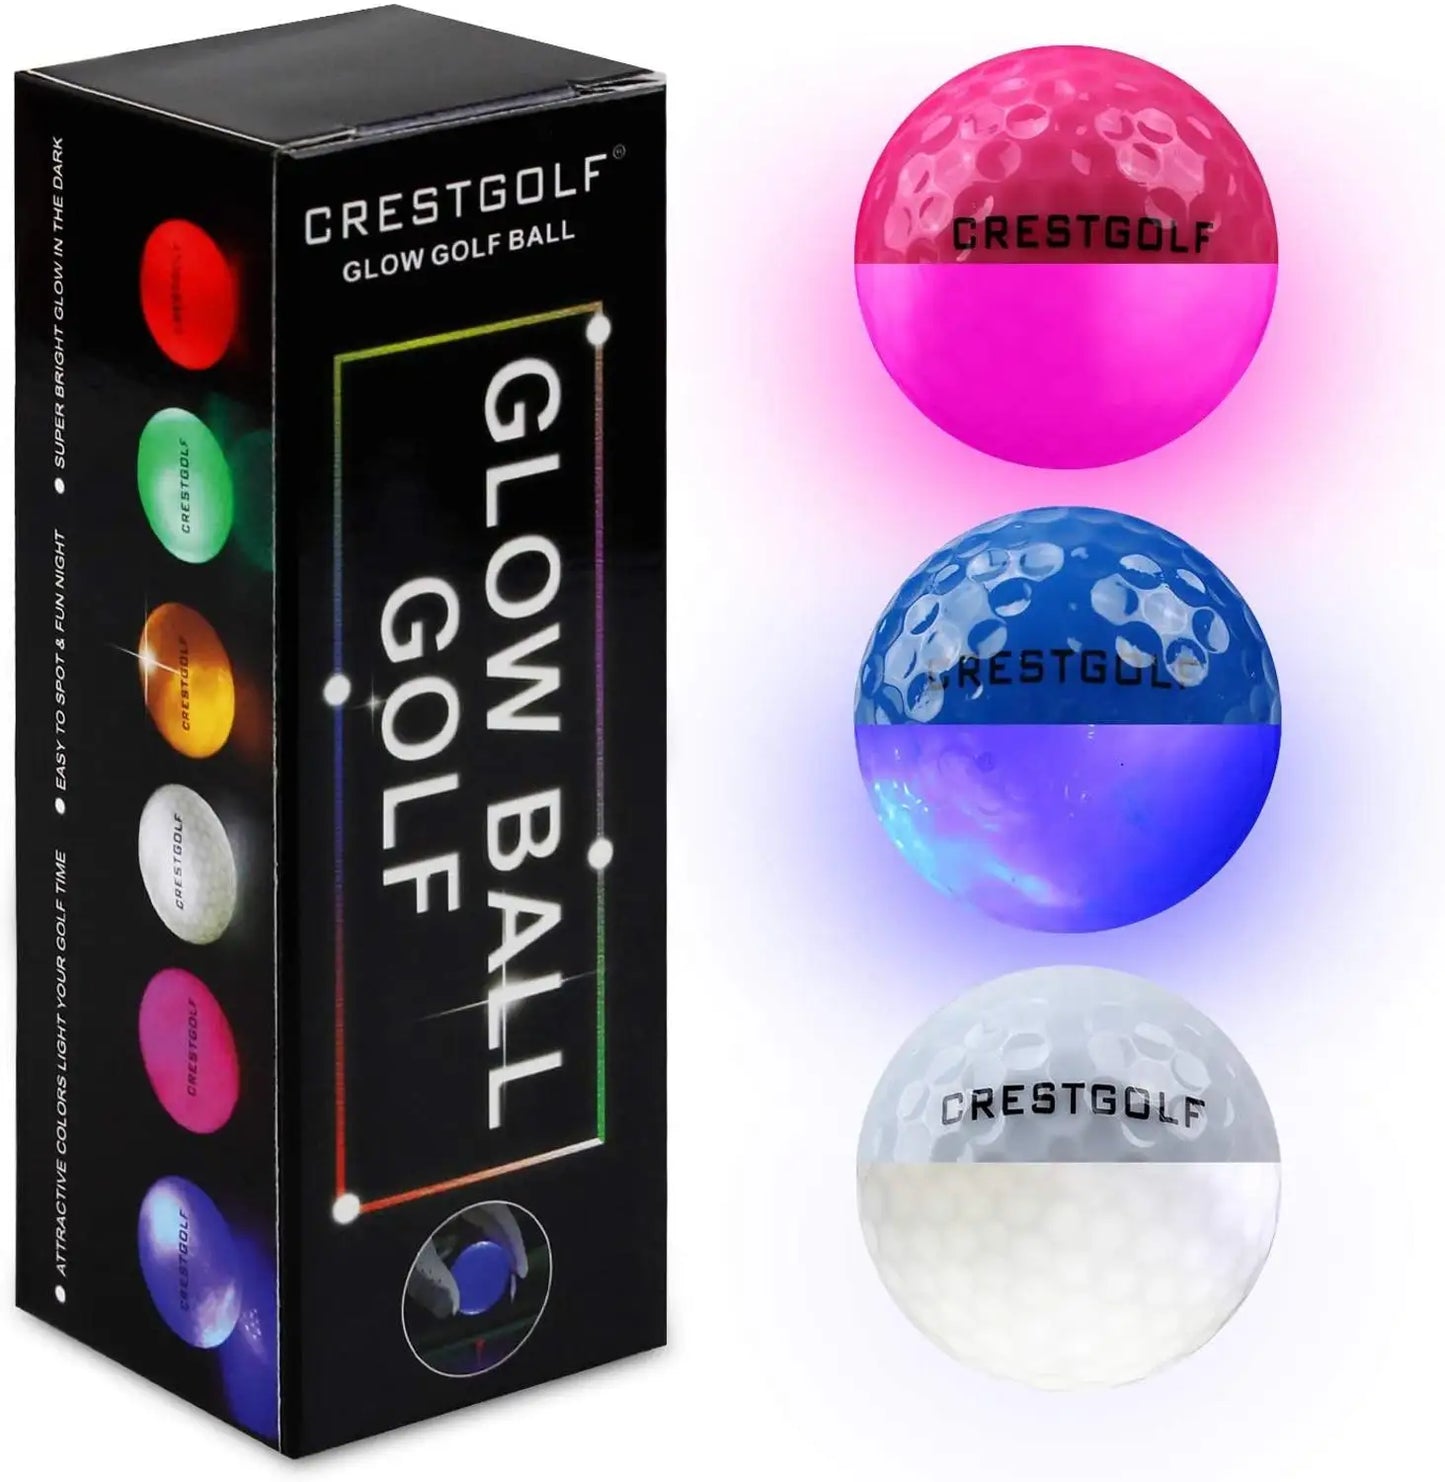 Crestgolf Twilight Golf Balls